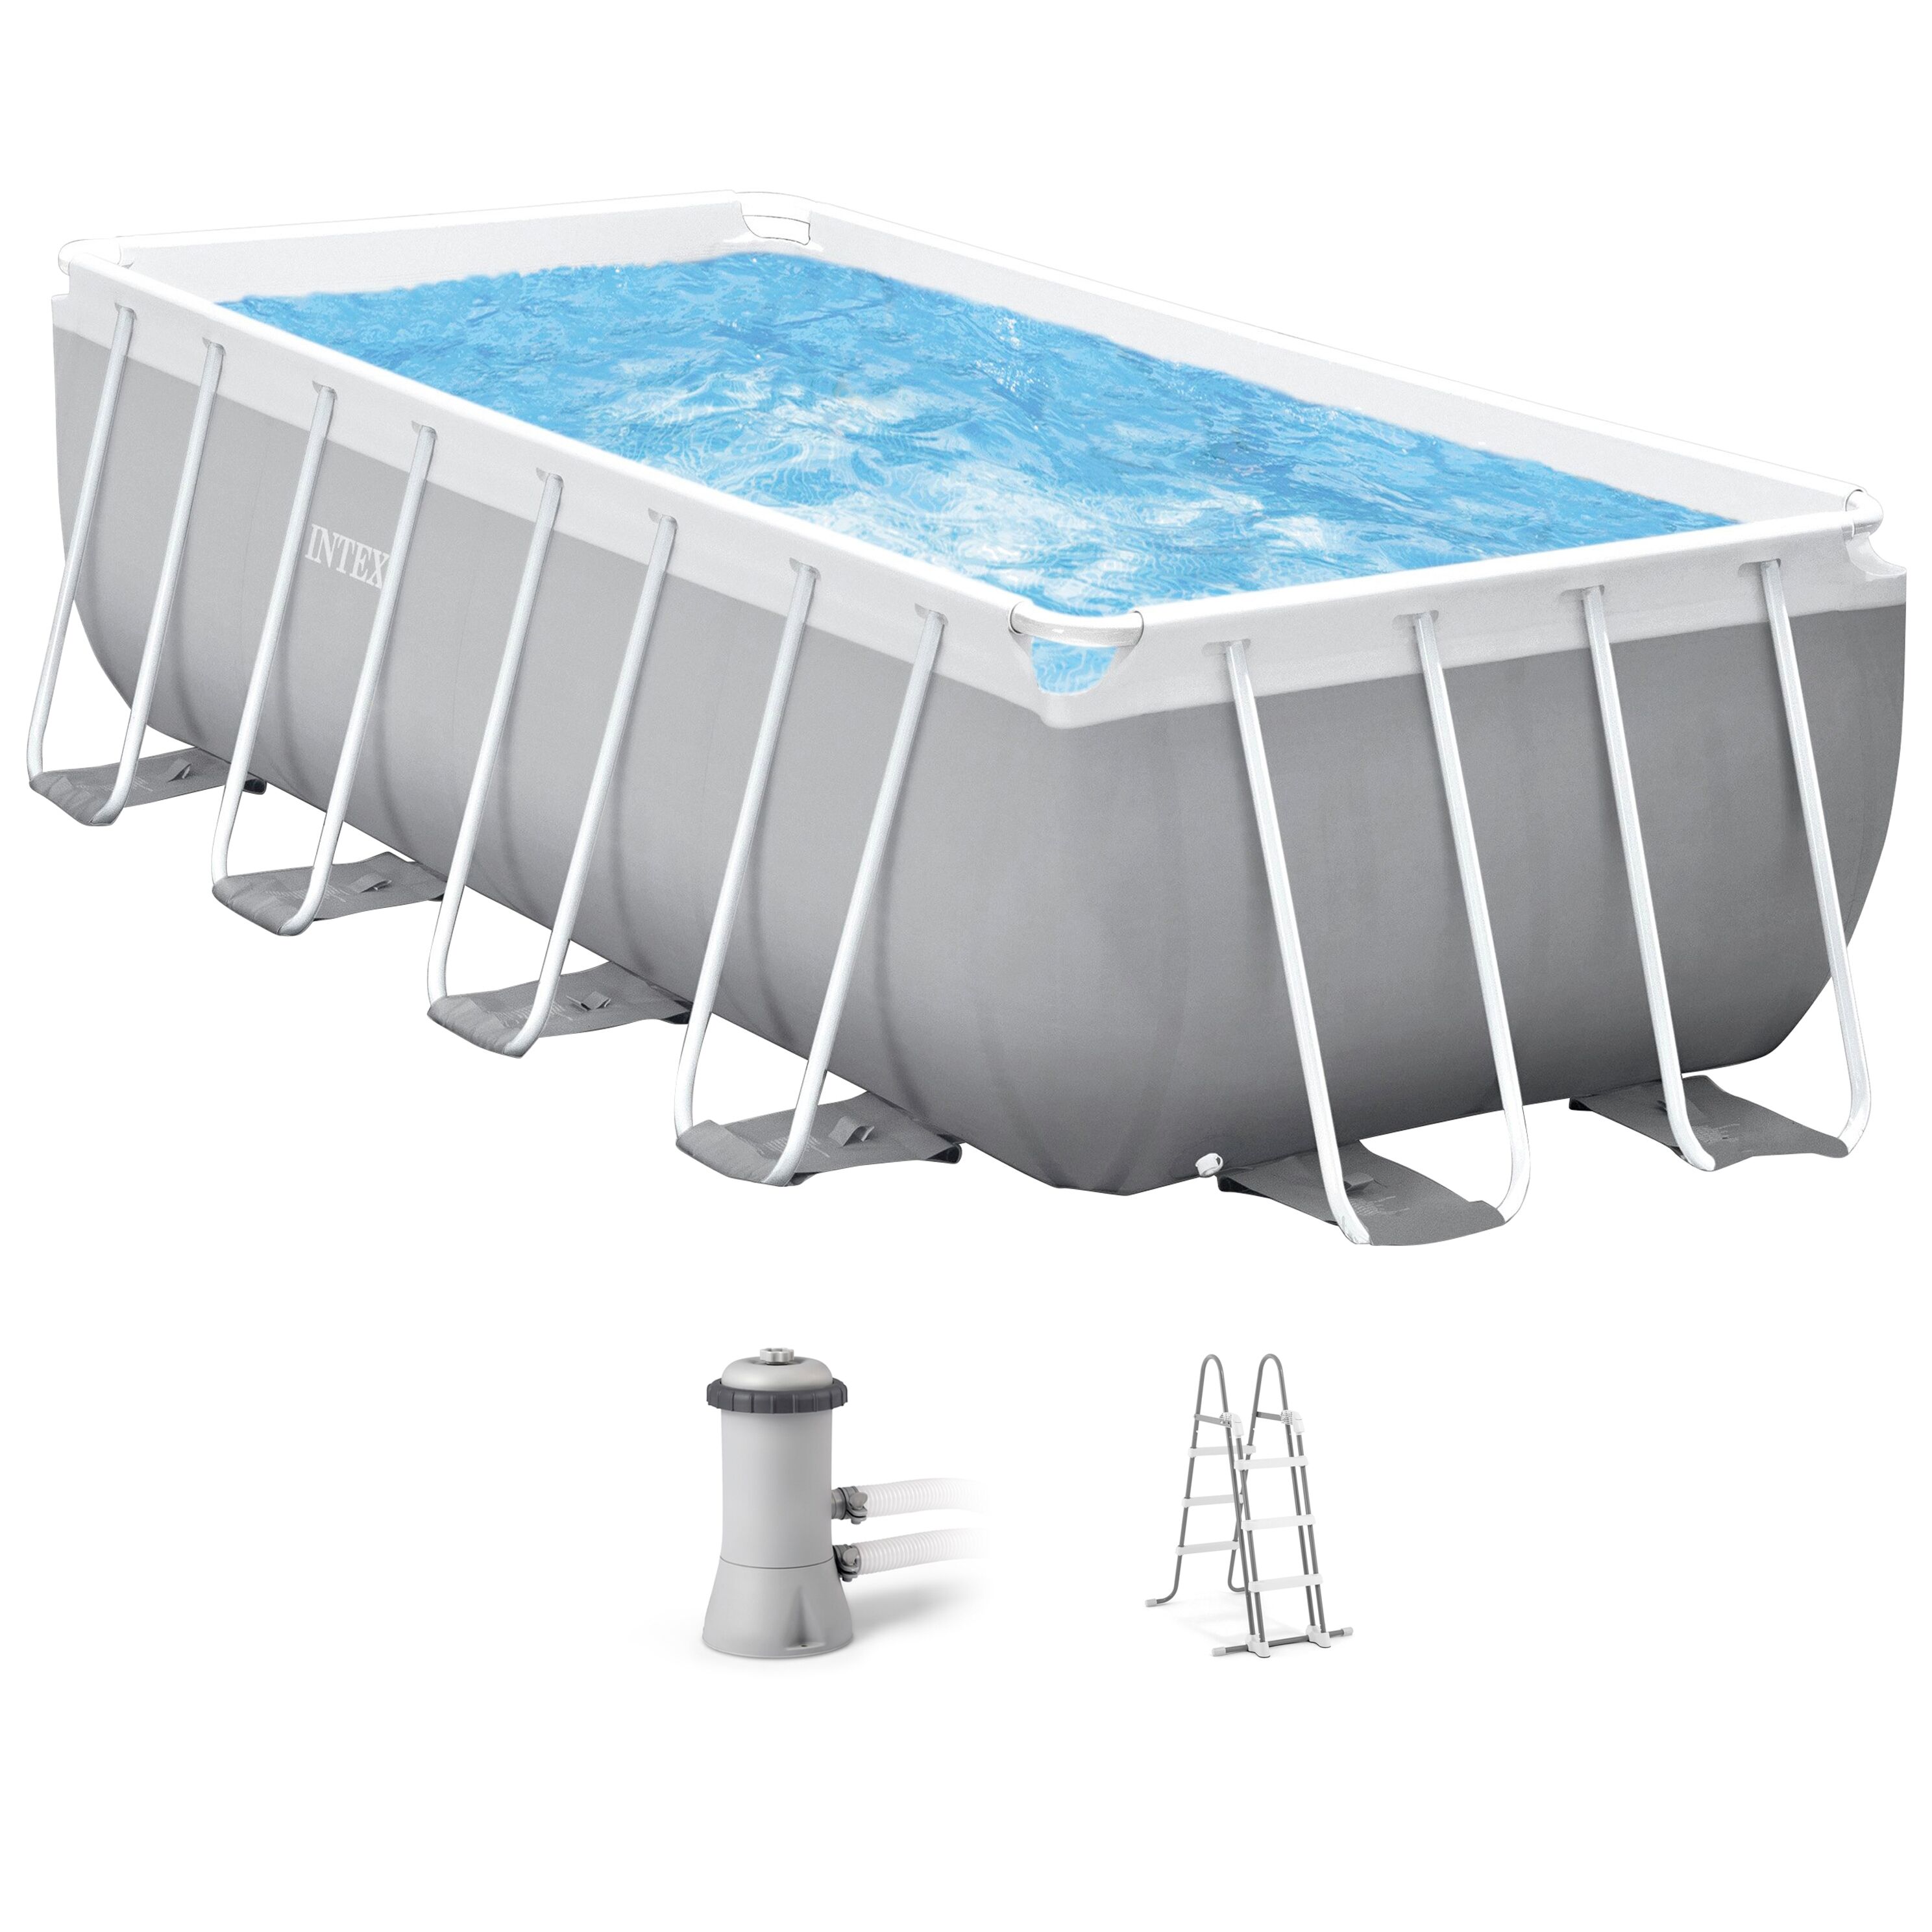 Framepool INTEX "PrismFrame" Schwimmbecken Gr. B/H/L: Breite 200 cm x Höhe 122 cm x Länge 400 cm, 8418 l, grau (grau, blau) Frame-Pools BxLxH: 200x400x122 cm